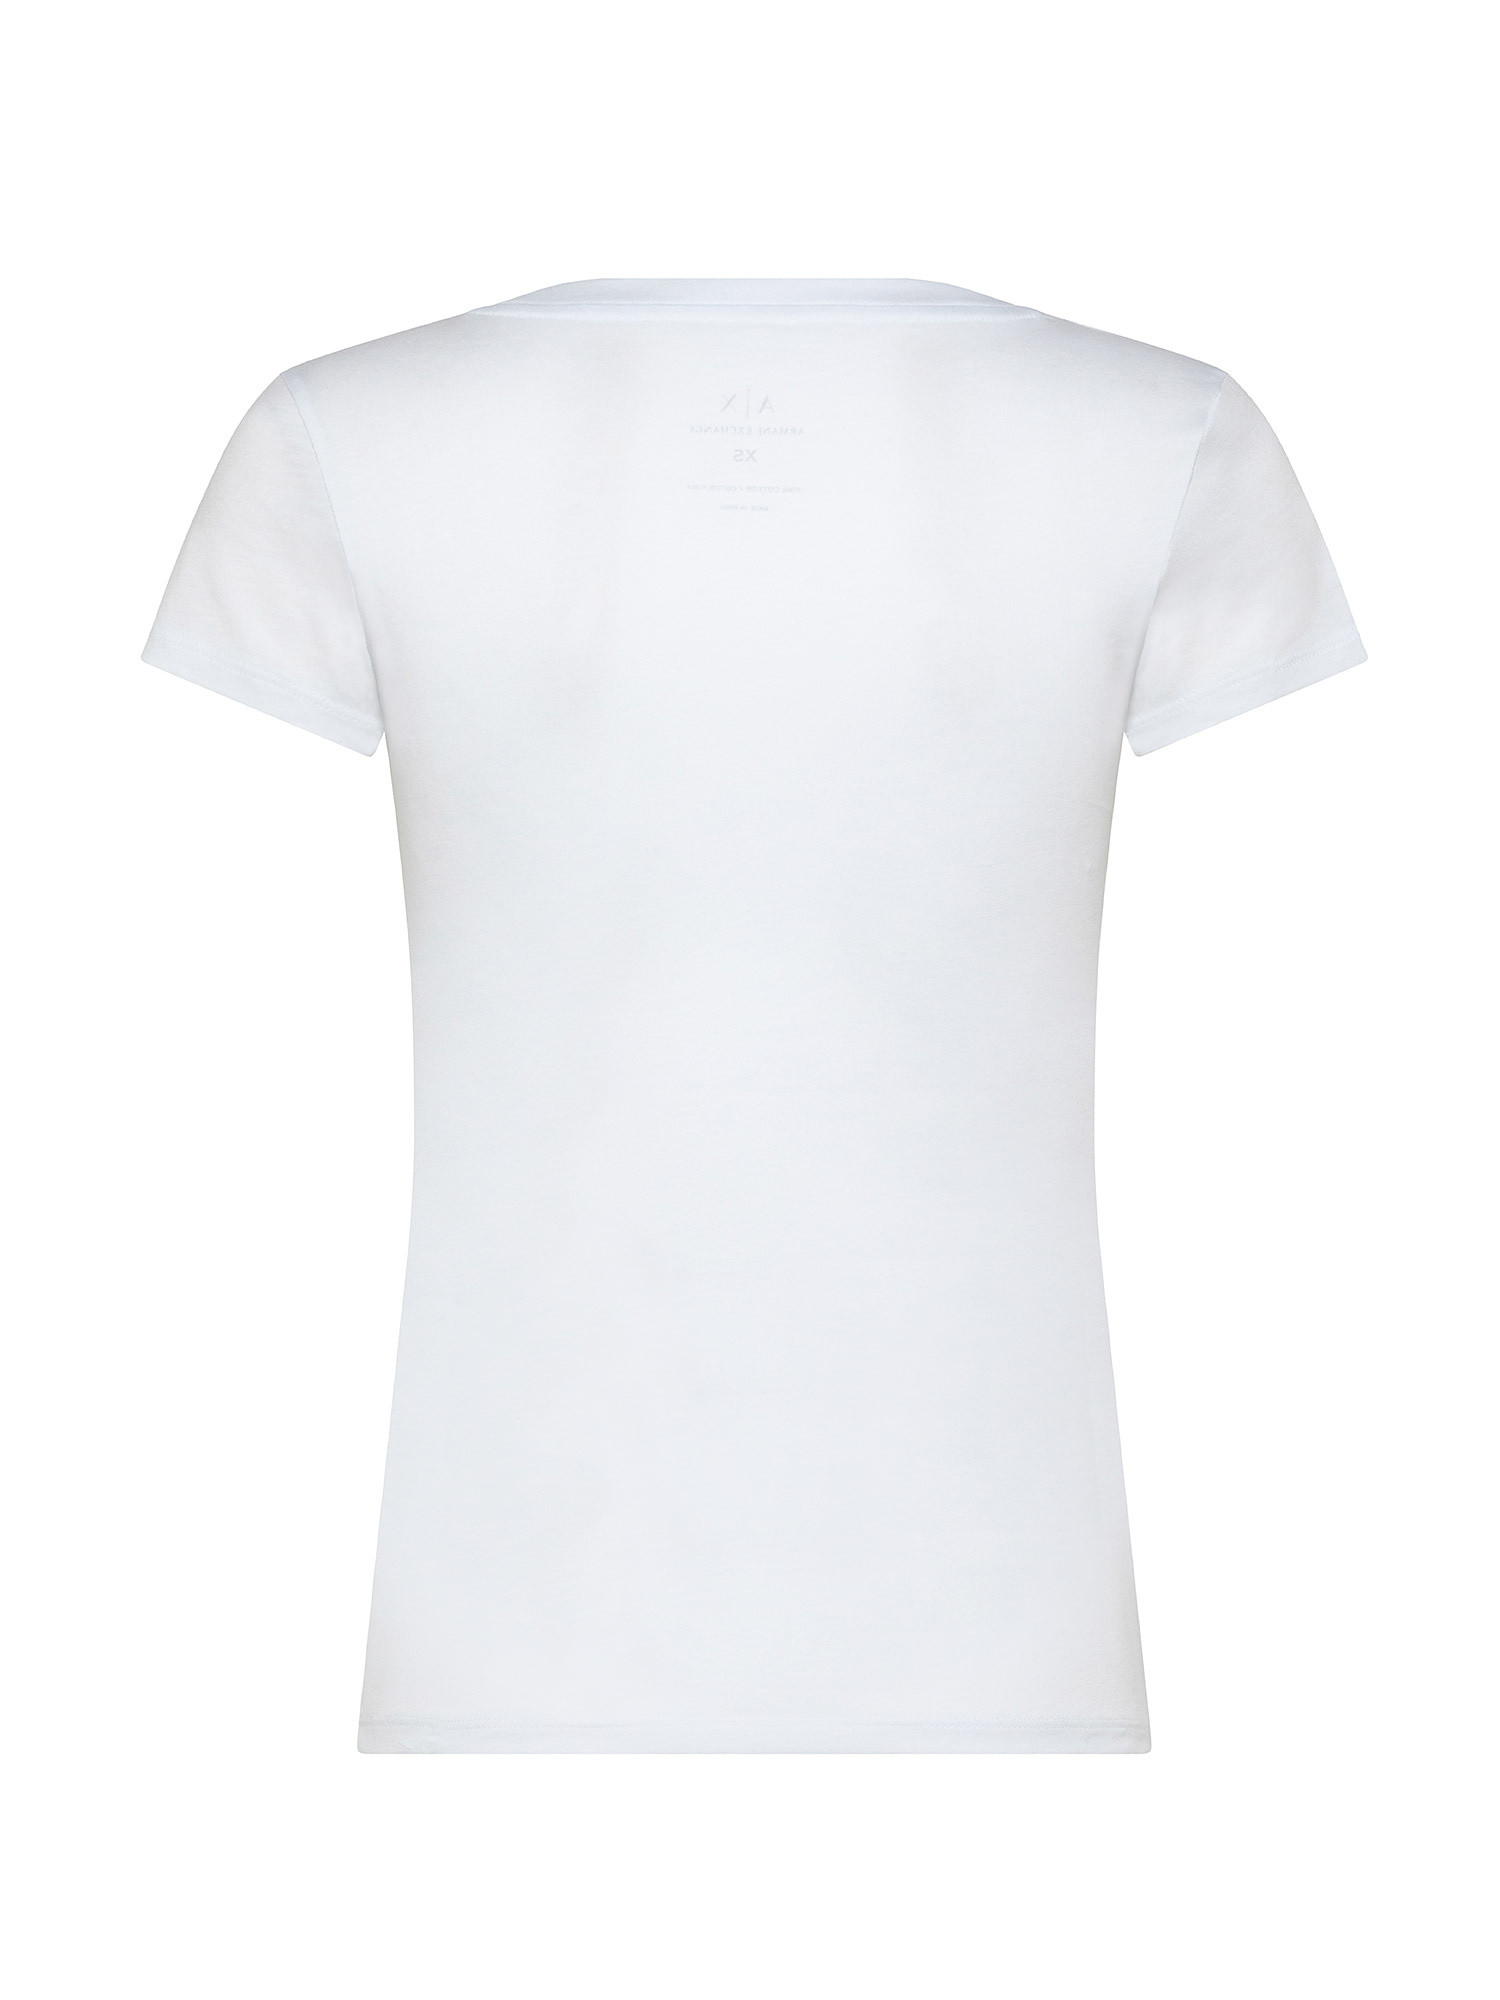 T-shirt boyfriend fit, Bianco, large image number 1